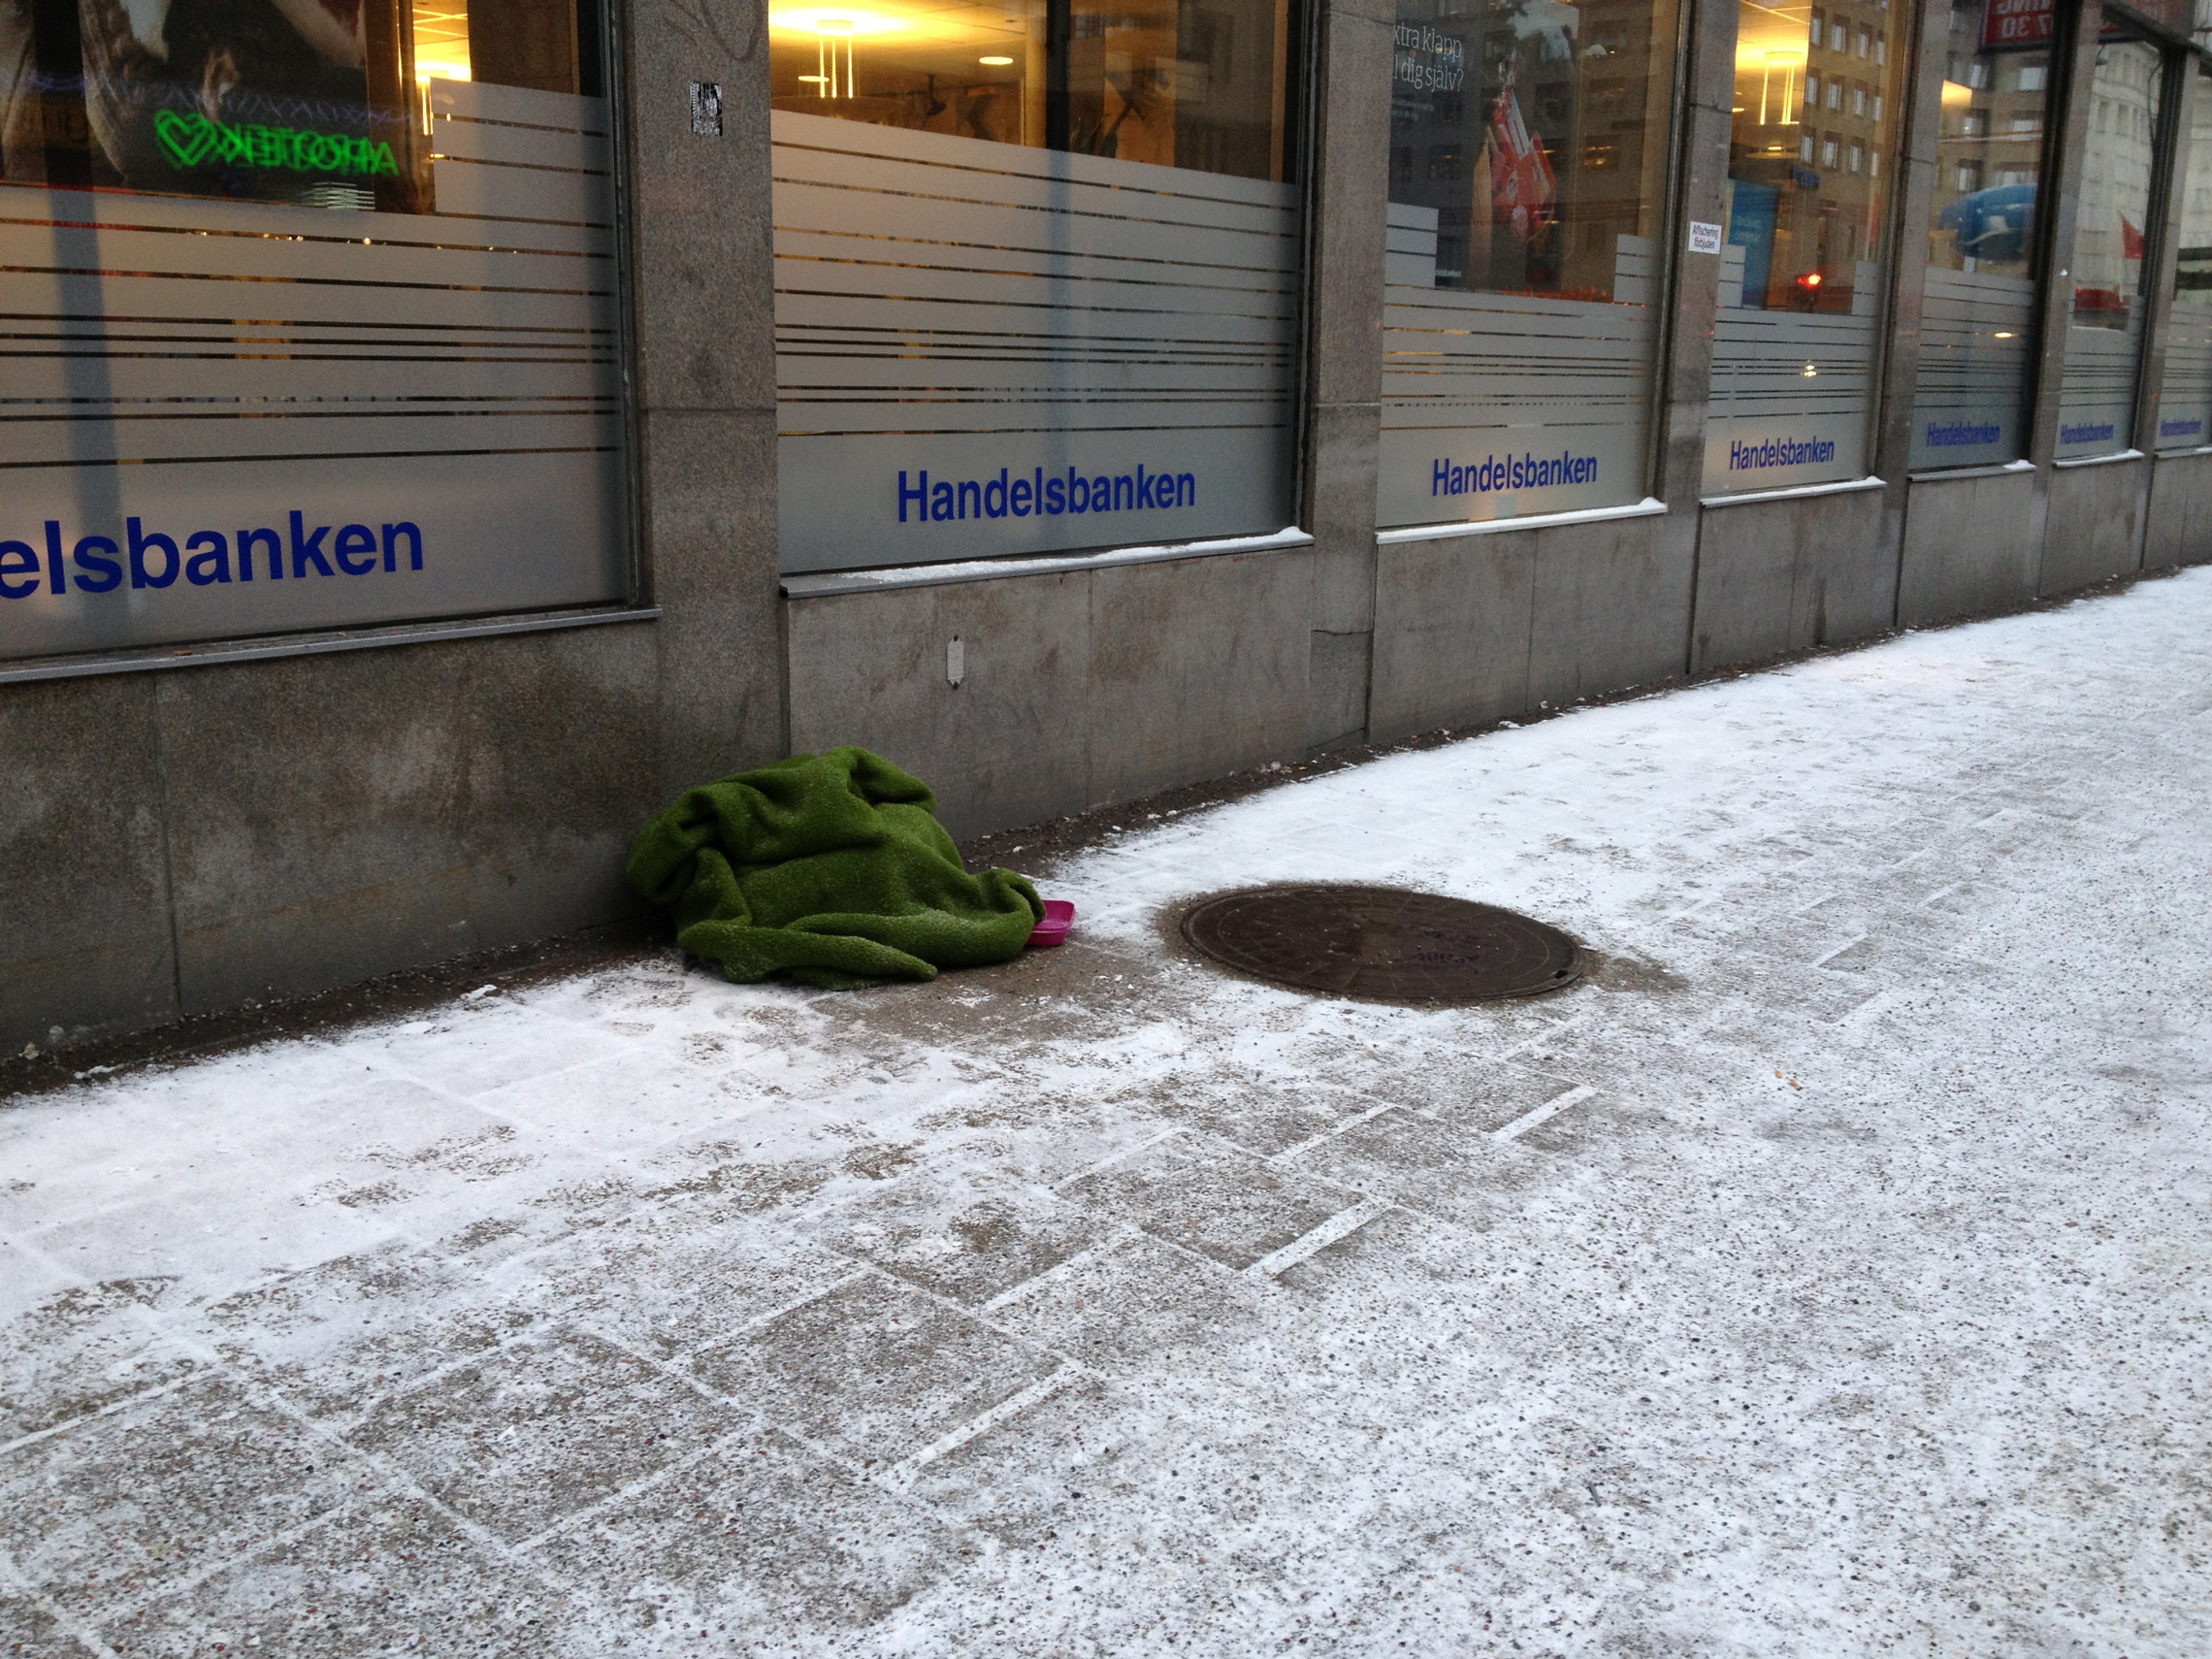 Götgatan, Stockholm, January 2013.